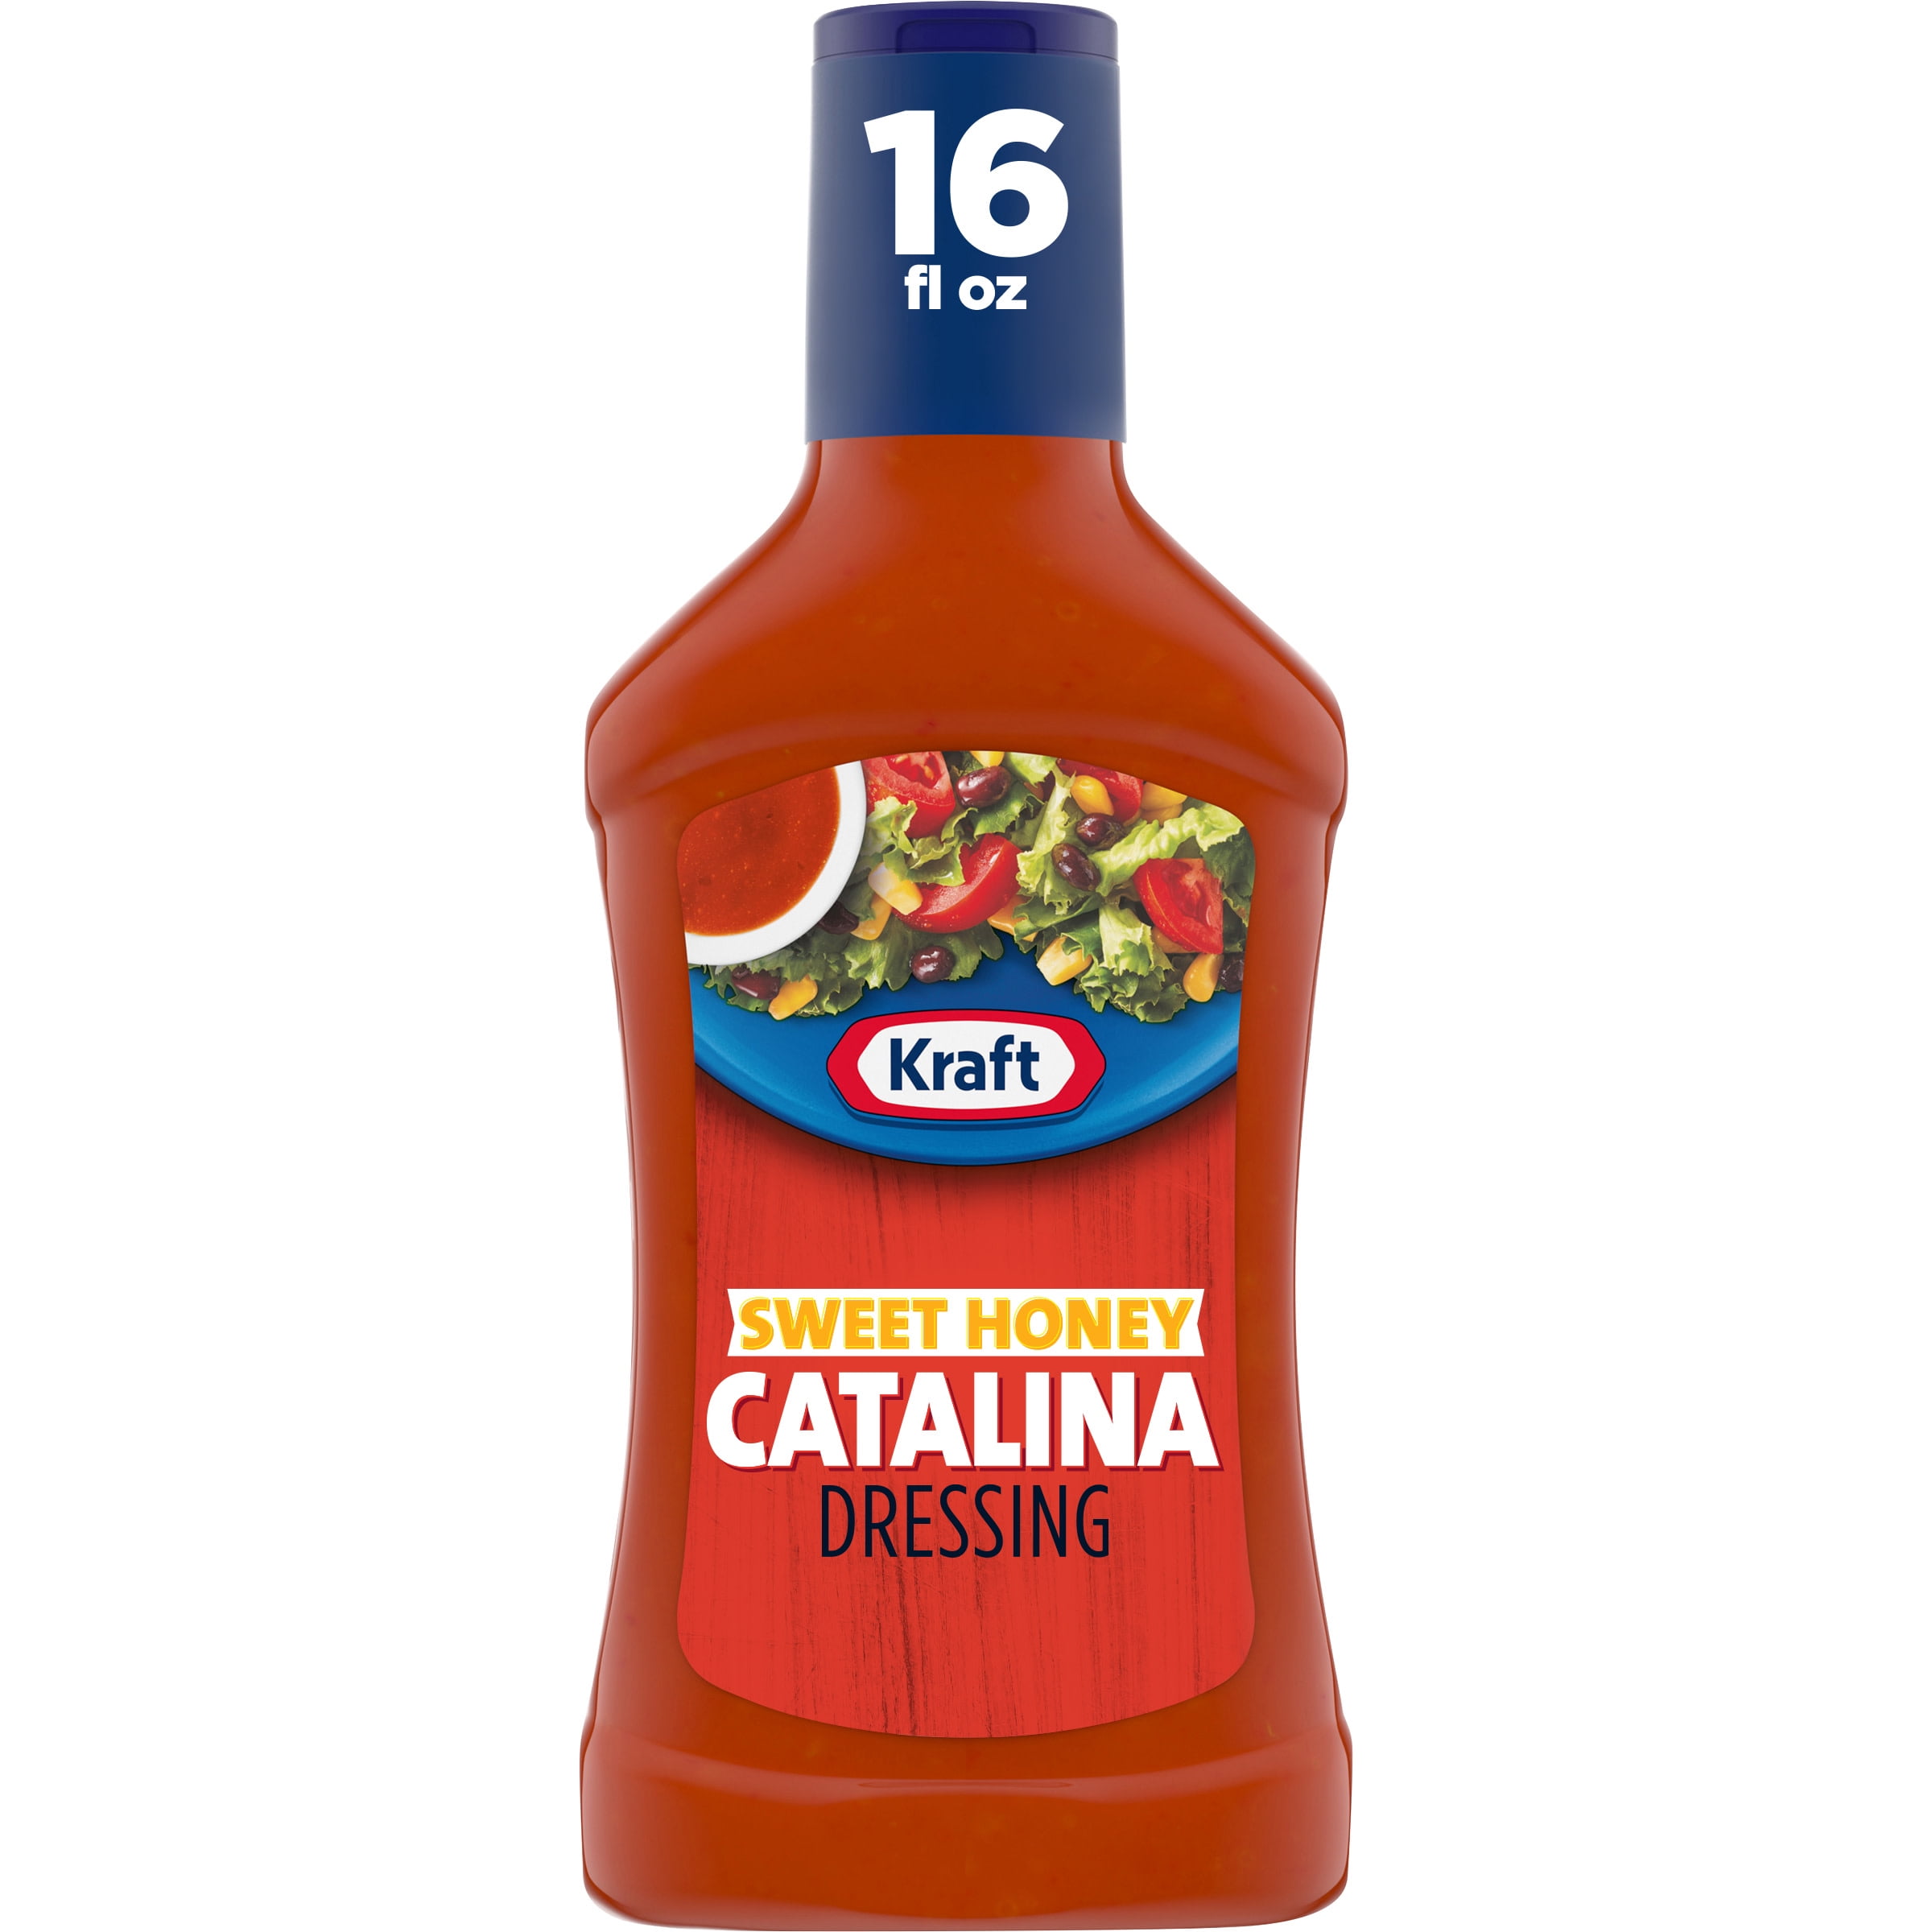 Kraft Sweet Honey Catalina Salad Dressing, 16 fl oz Bottle